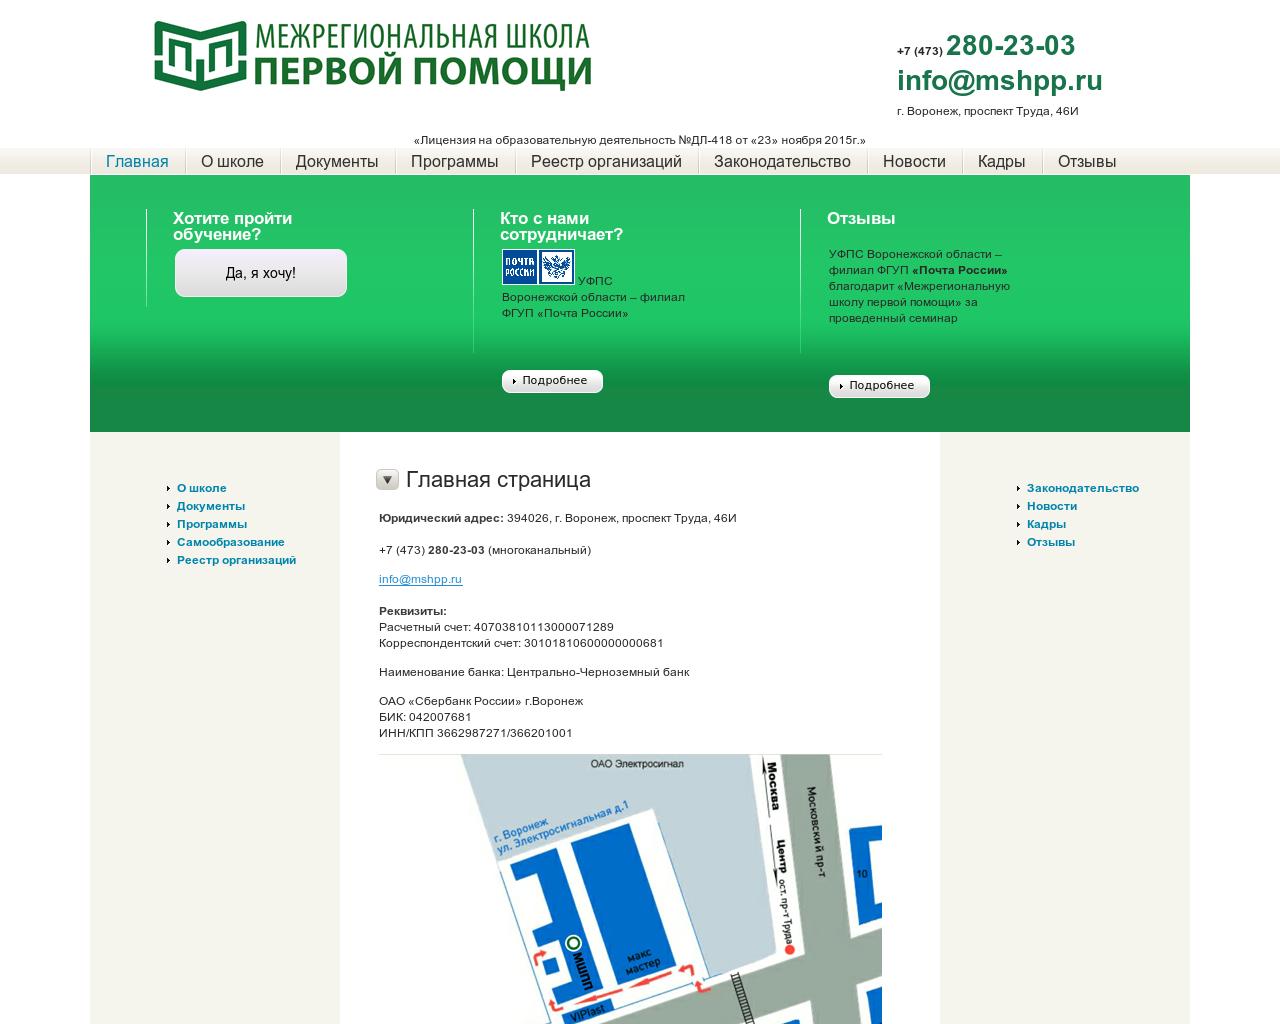 Изображение сайта mshpp.ru в разрешении 1280x1024